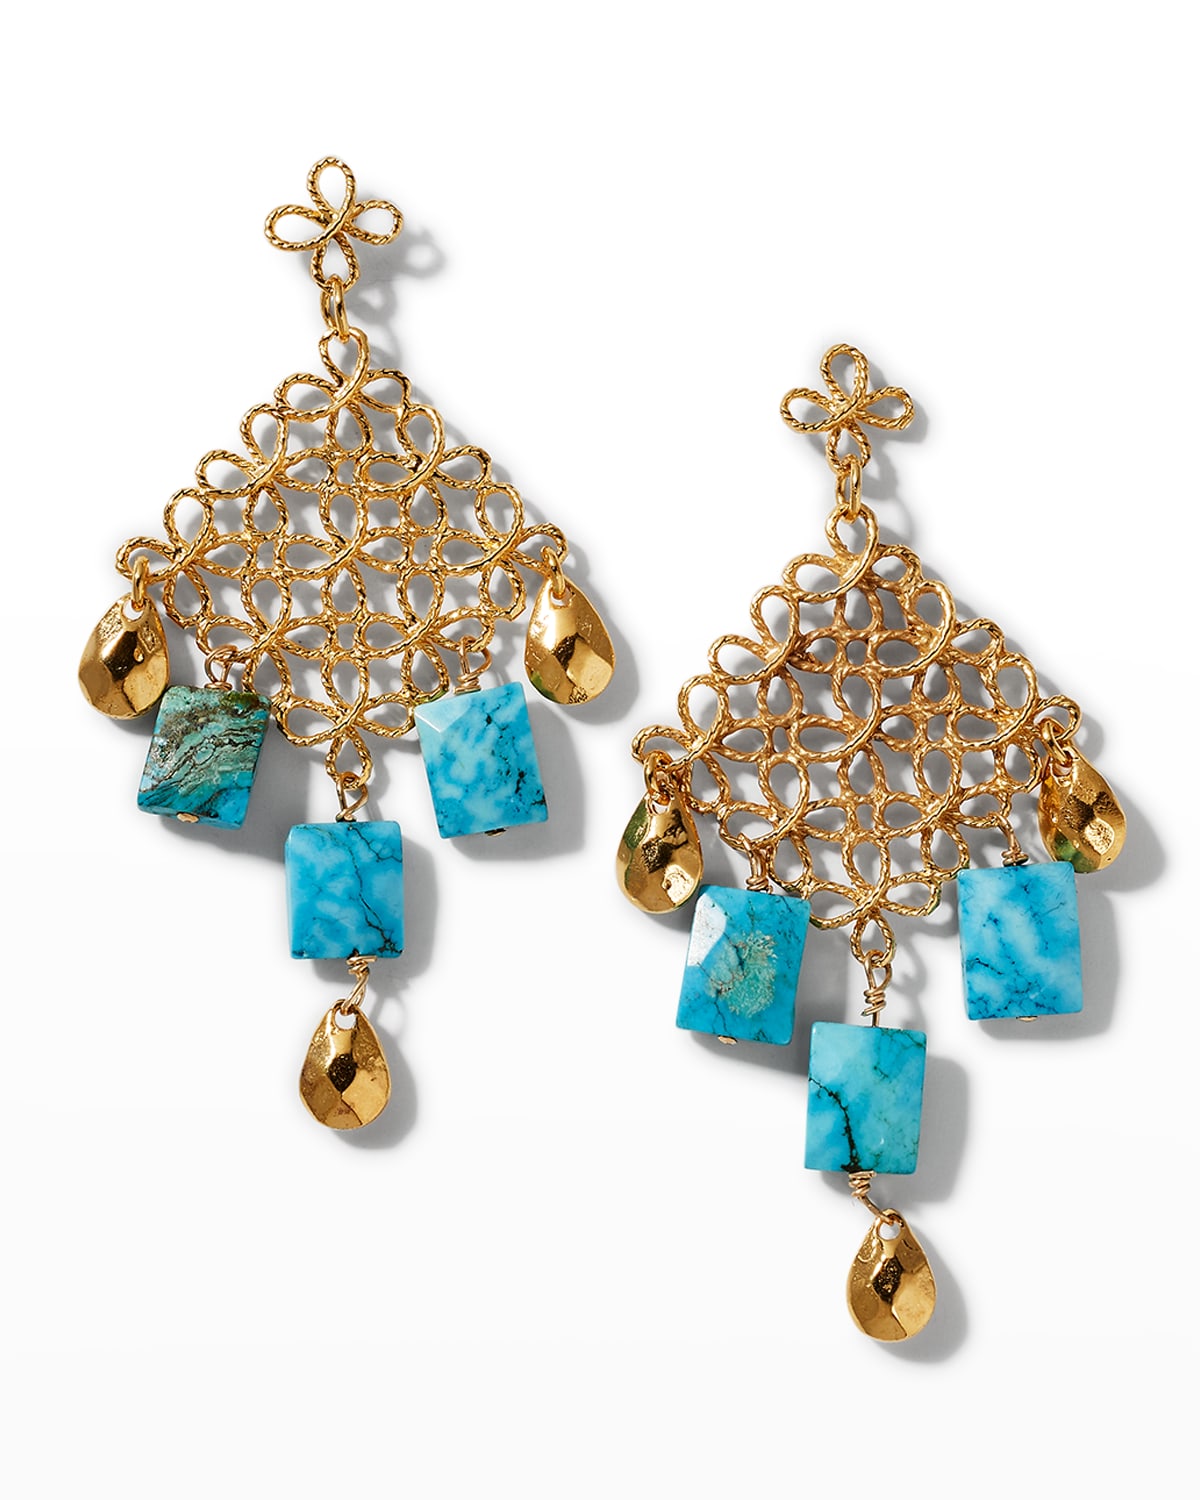 Devon Leigh Filigree Turquoise Chandelier Post Earrings